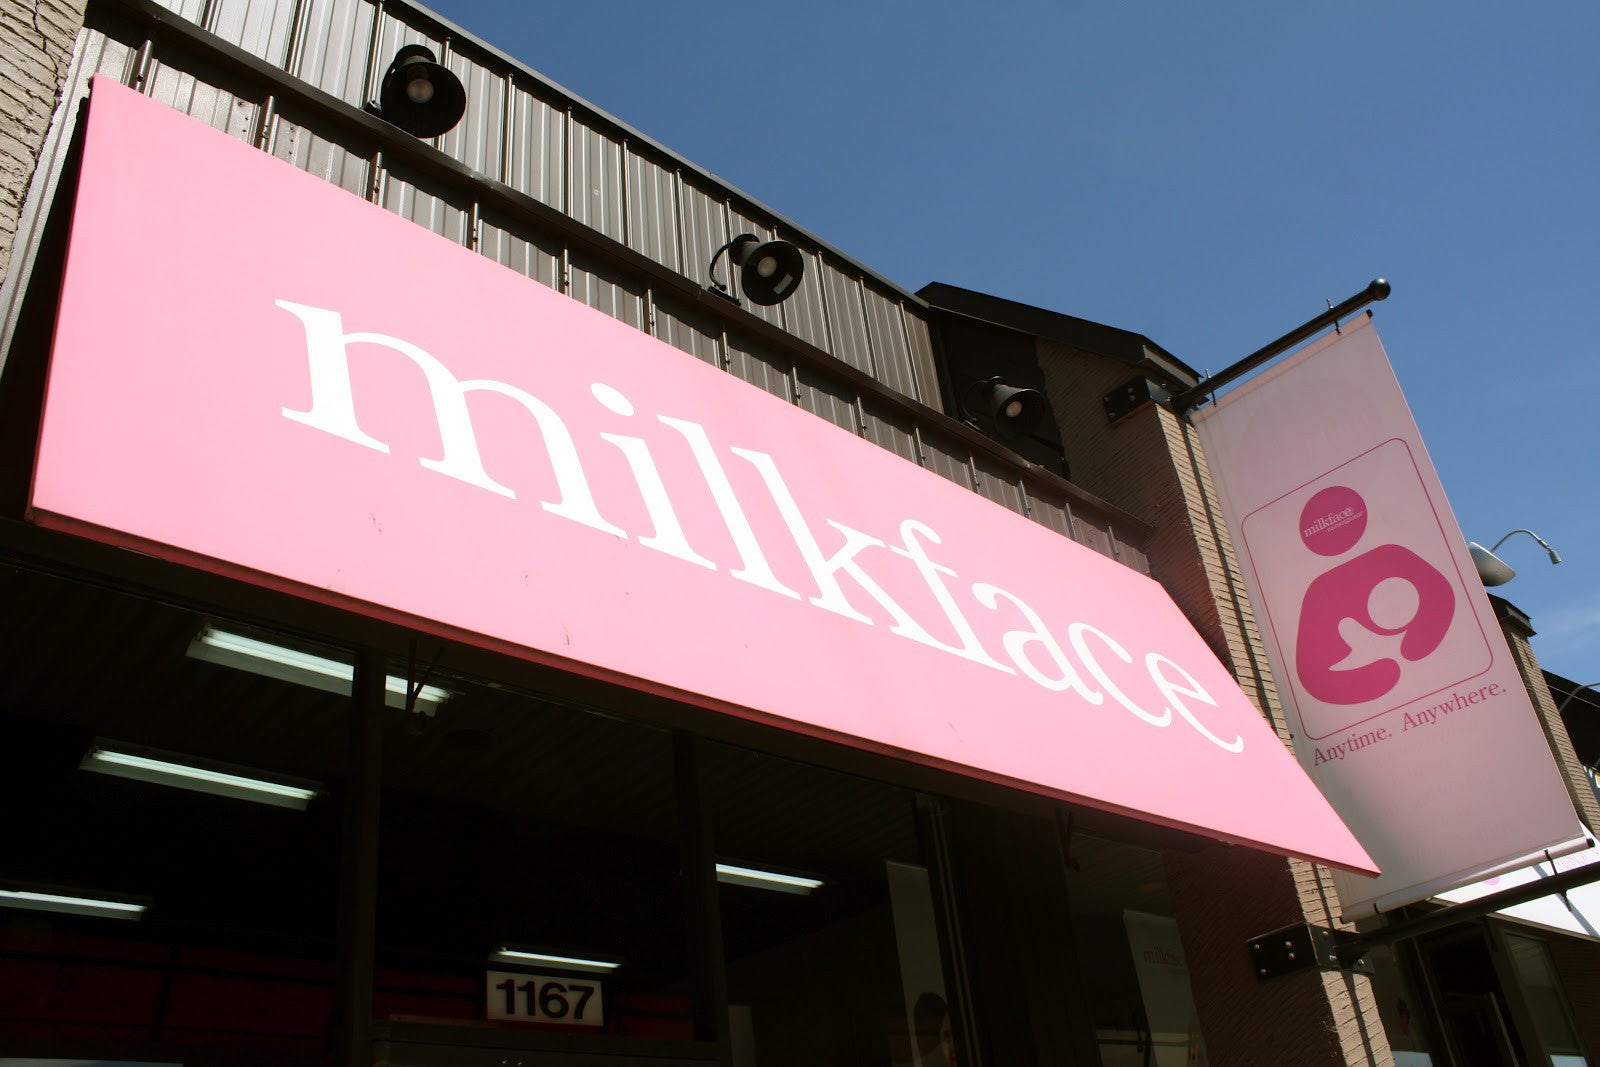 Milkface storefront in Ottawa